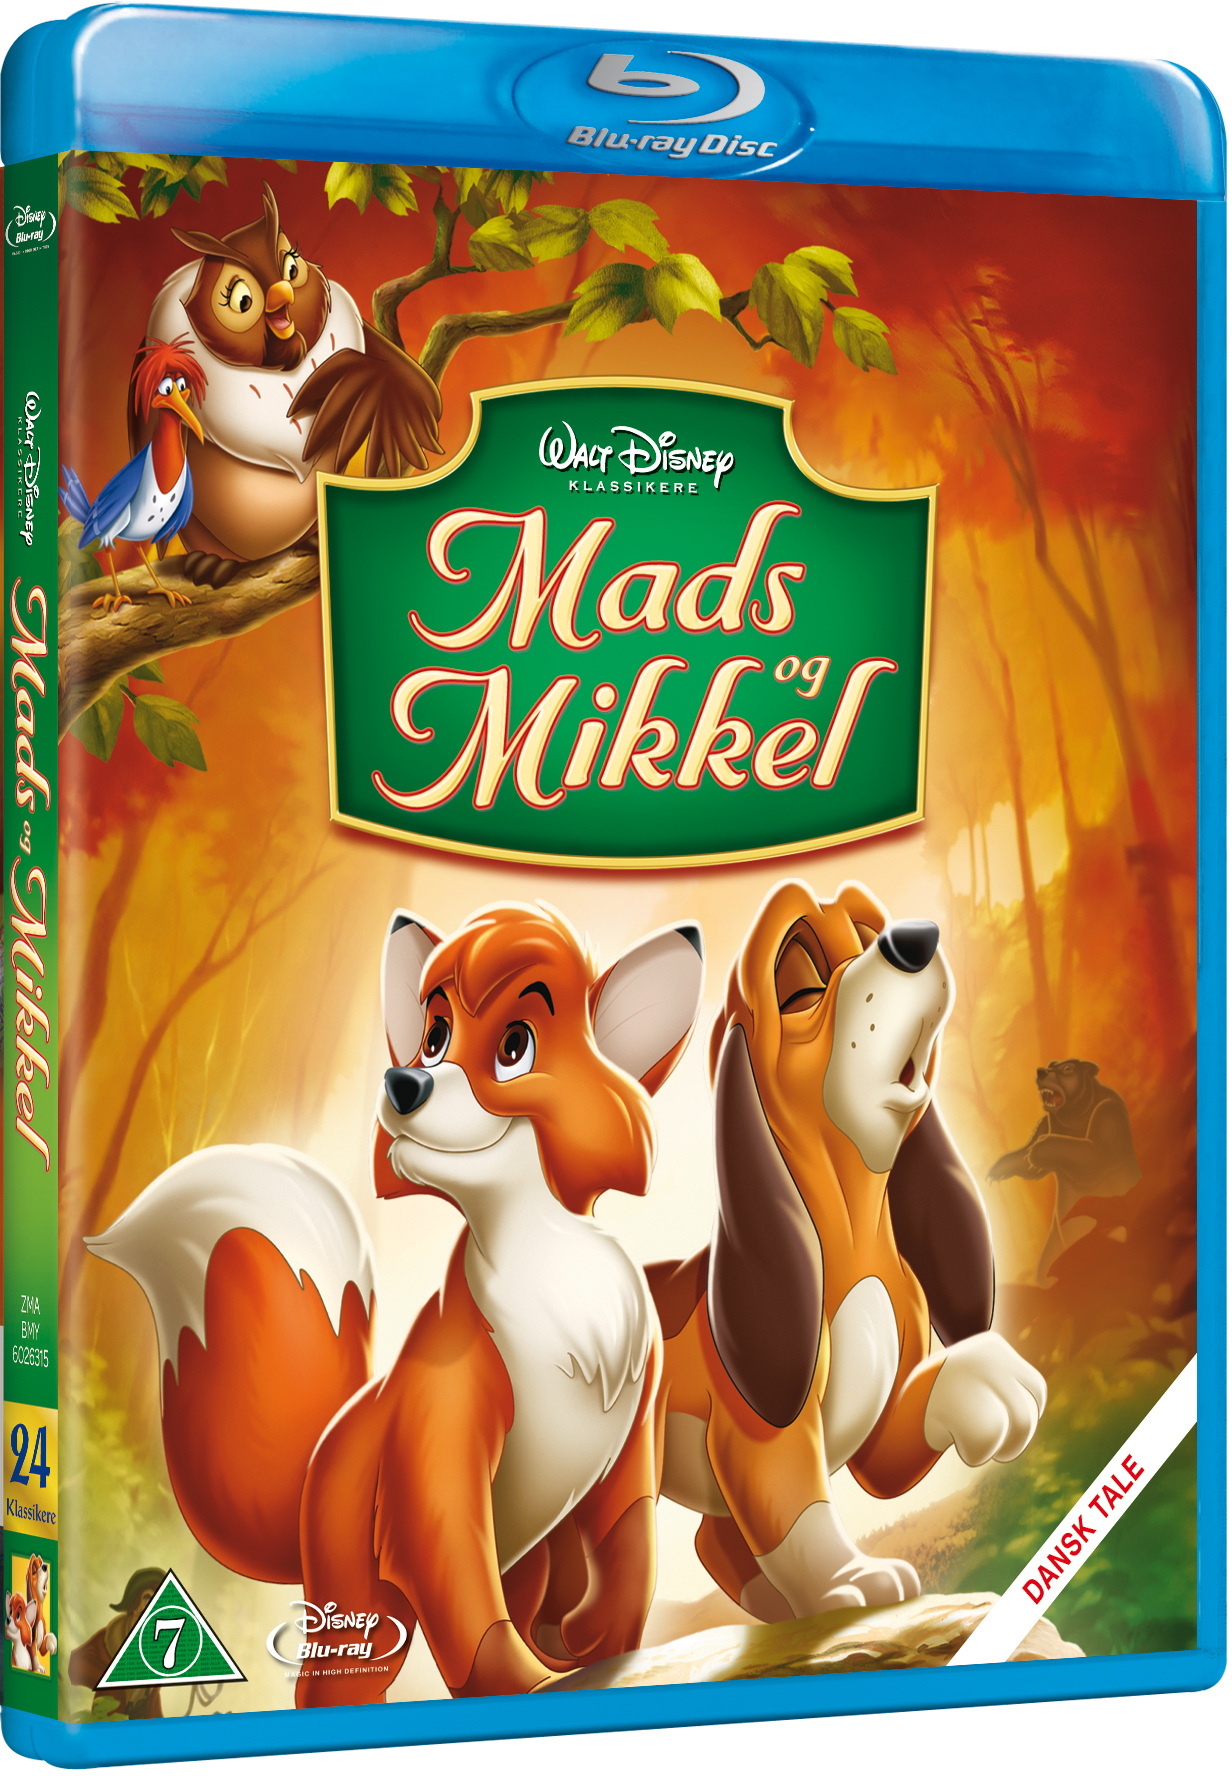 Disneys The Fox and the Hound (Blu-Ray)